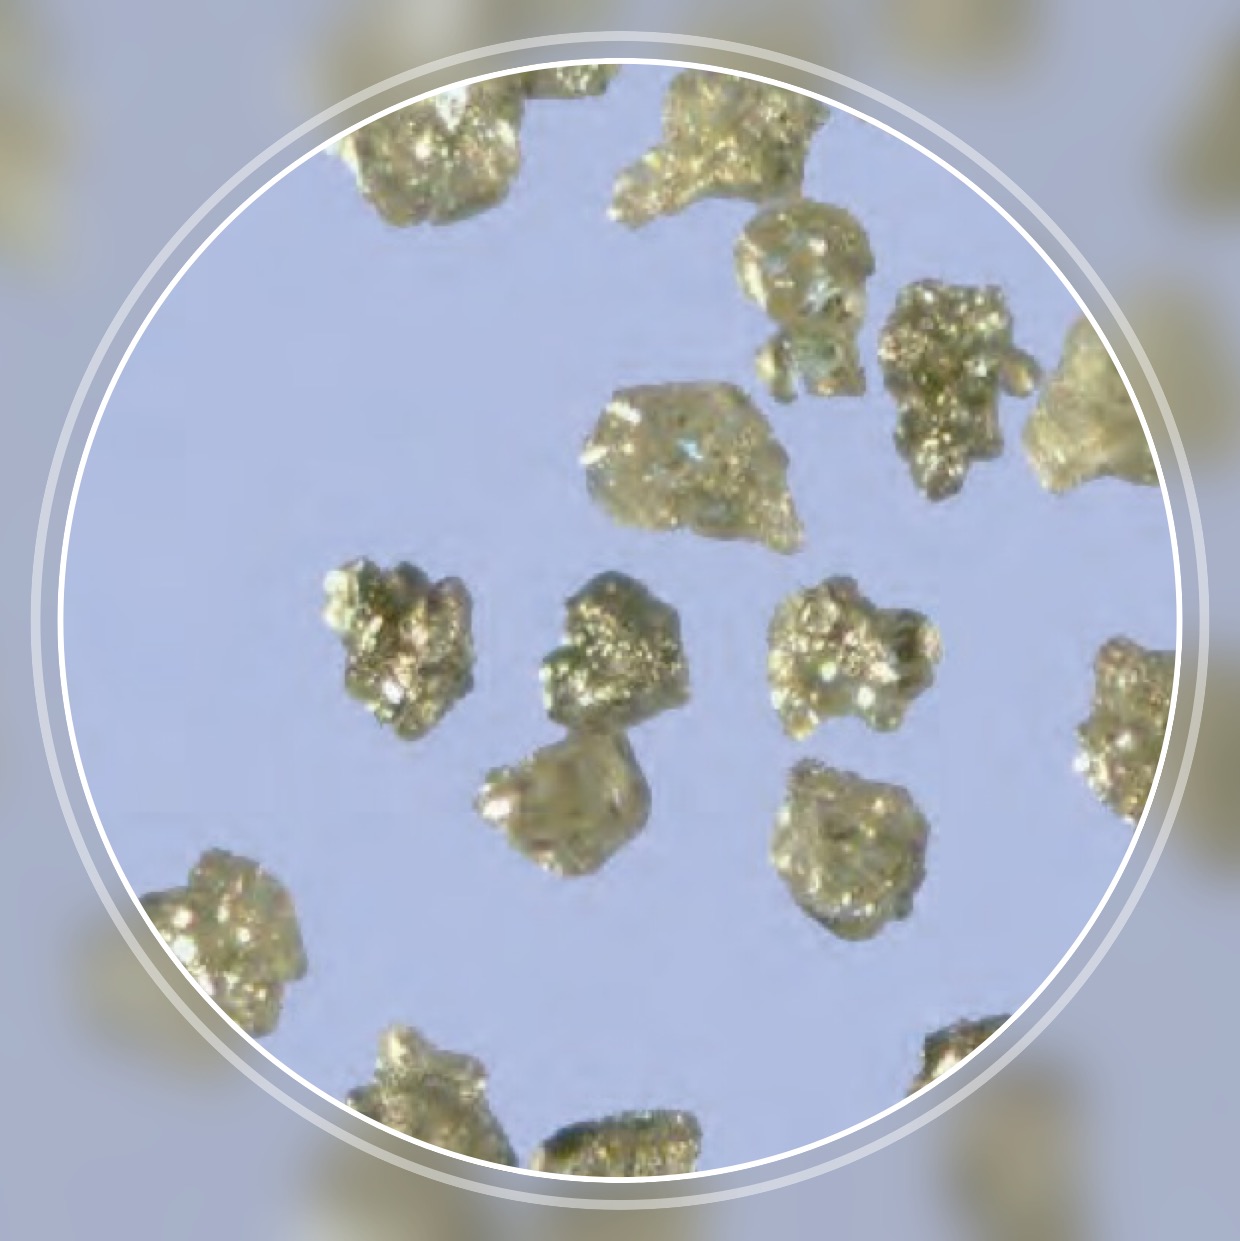 SND-R15 Standard Grade Blocky Resin Bond Diamond With Medium Friability Featured Image